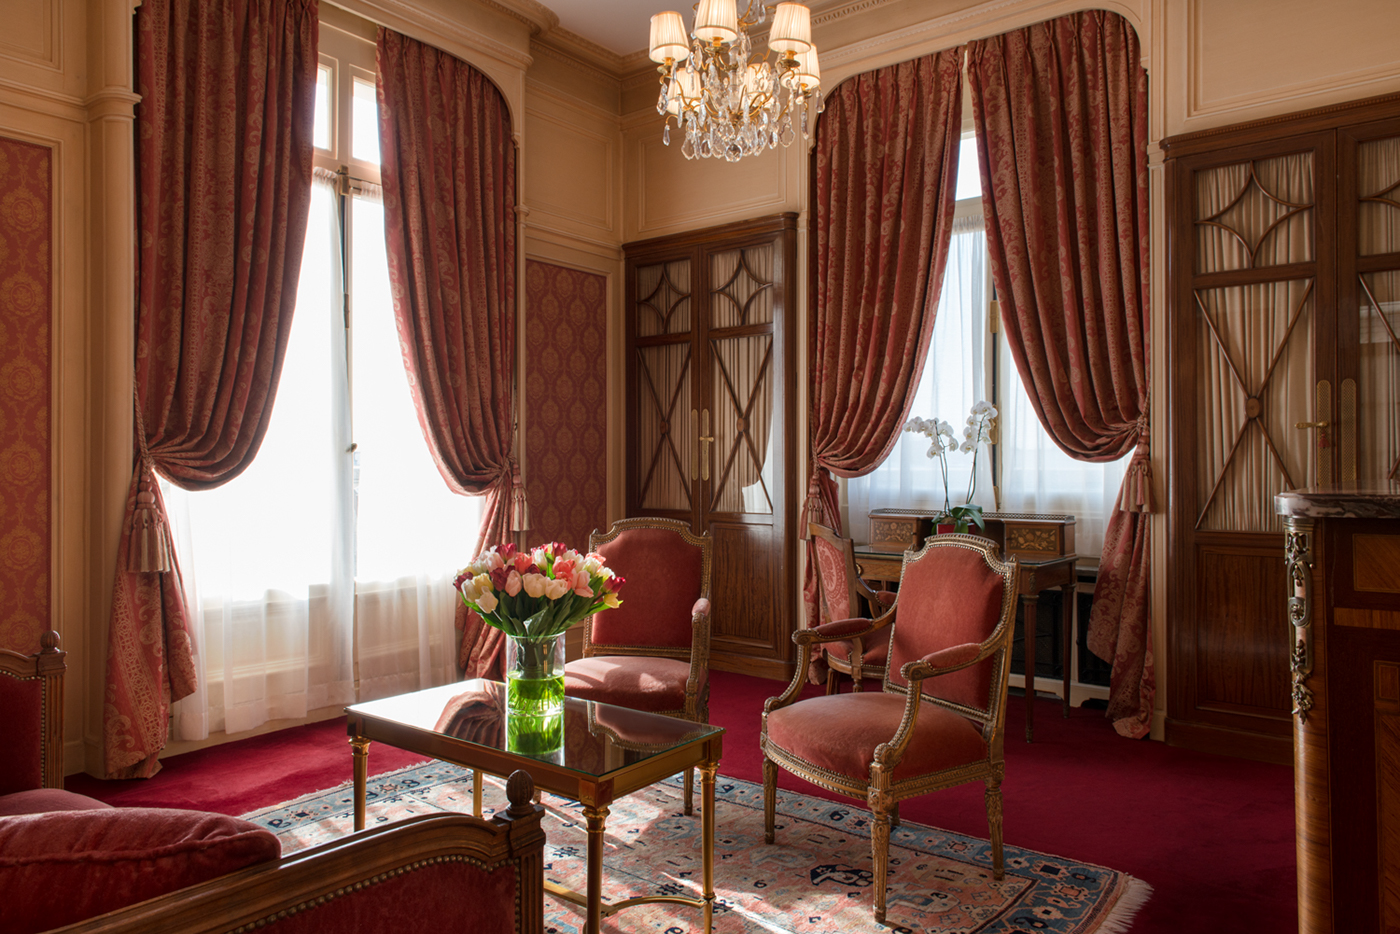 hotel raphael Paris france palace luxury hotel 5 Star prestige historical heritage five-star arc de triomphe high-end